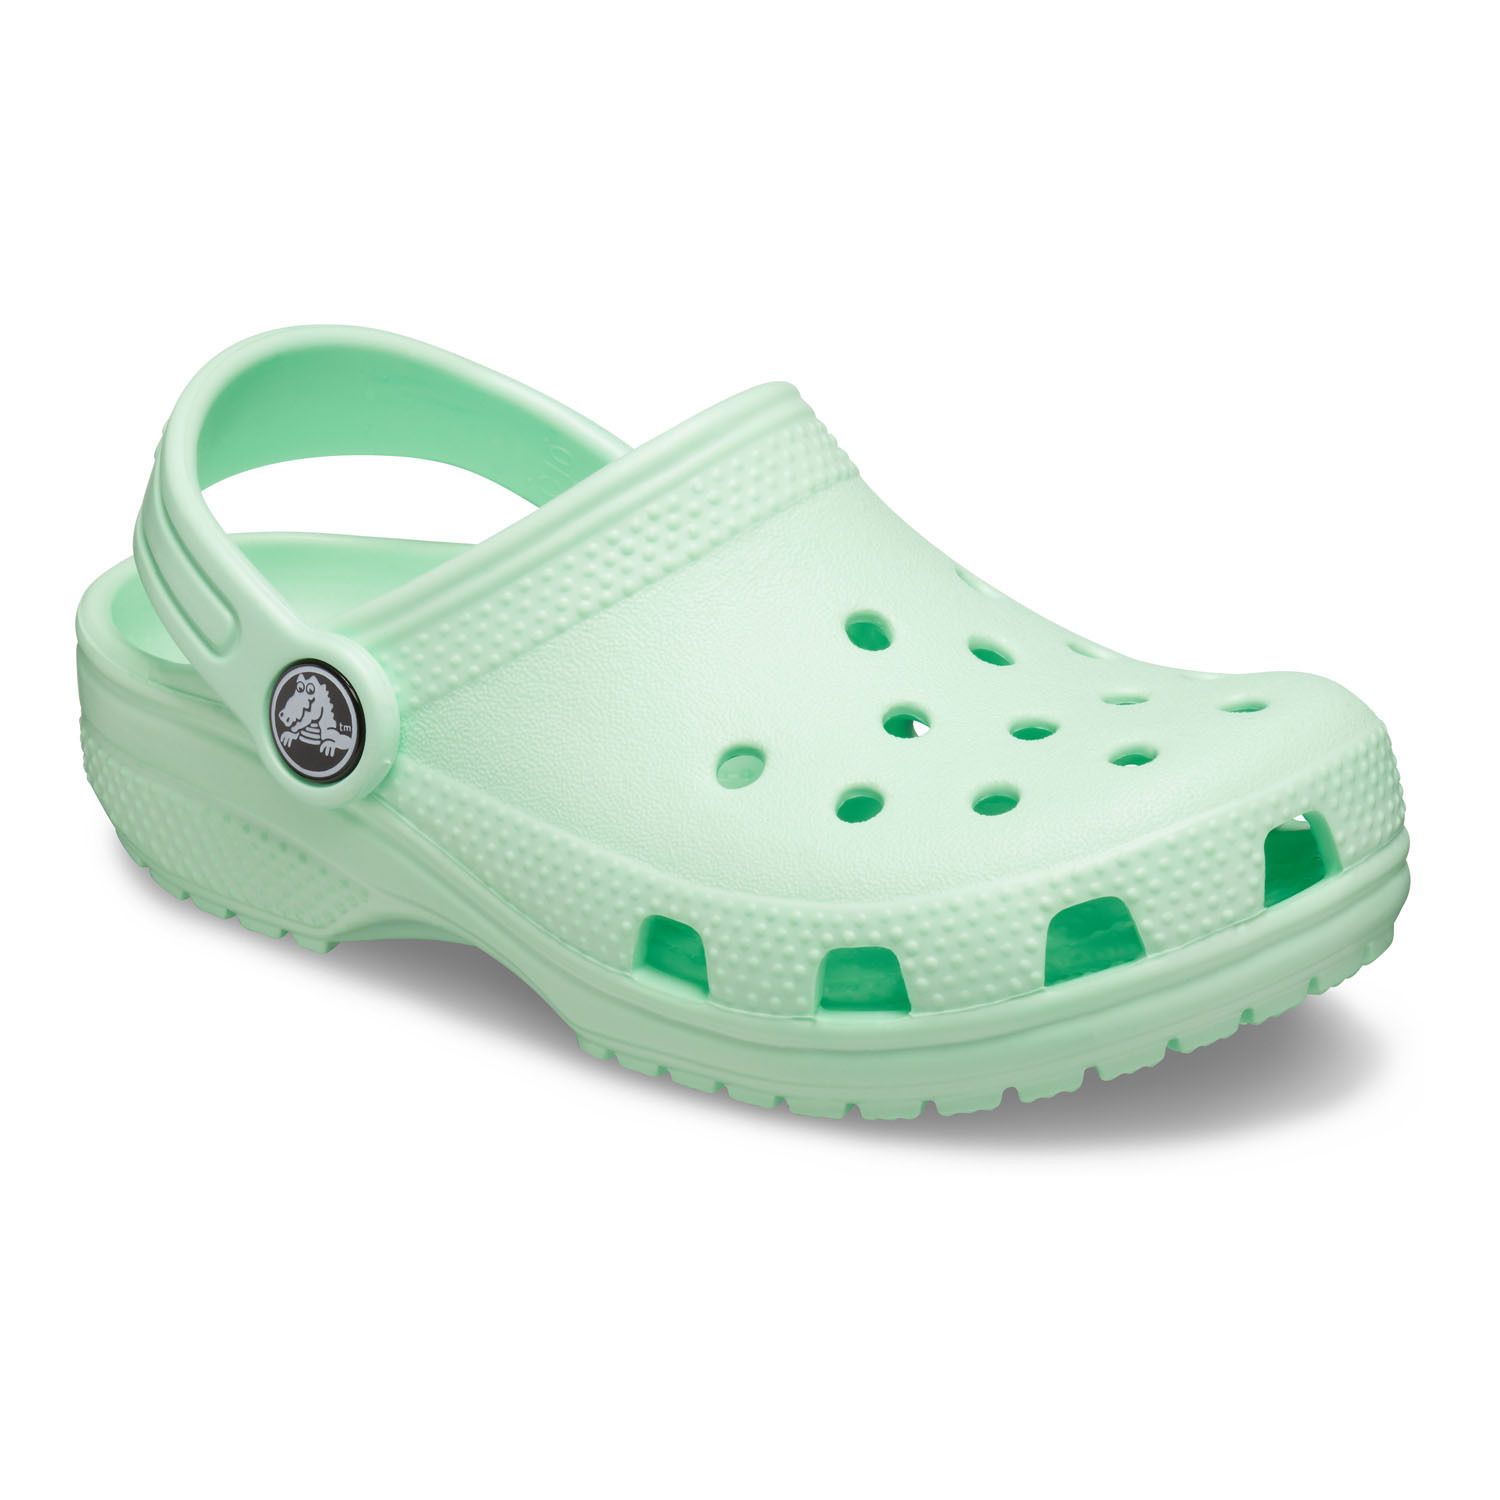 crocs near me for kids